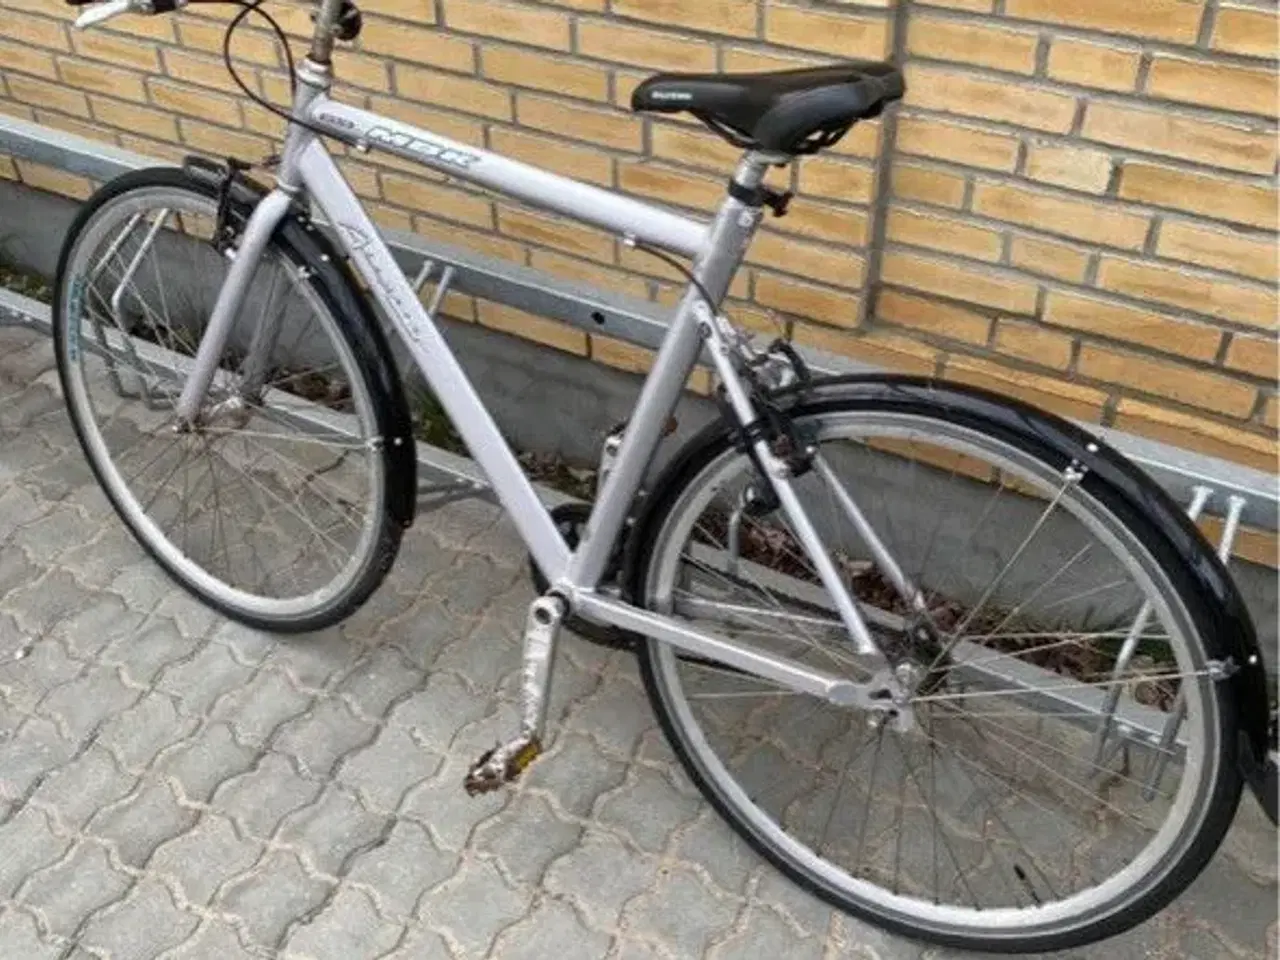 Billede 2 - Cykel uden gear.